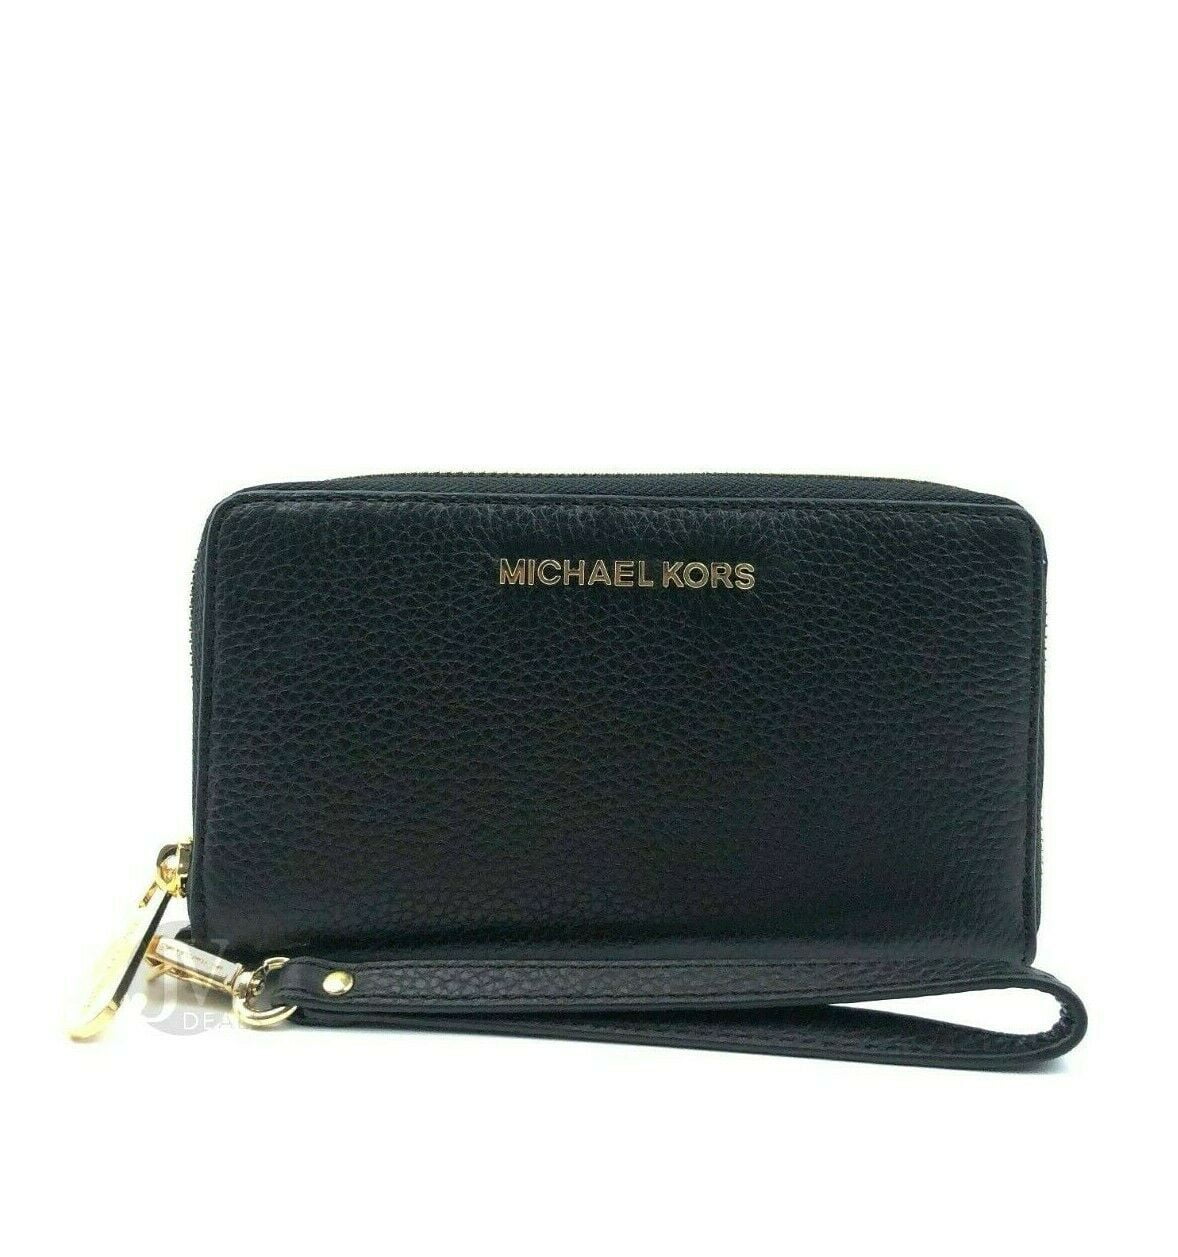 Michael Kors Jet Set Travel Large Phone Wristlet Wallet Pebbled Leather  Black 